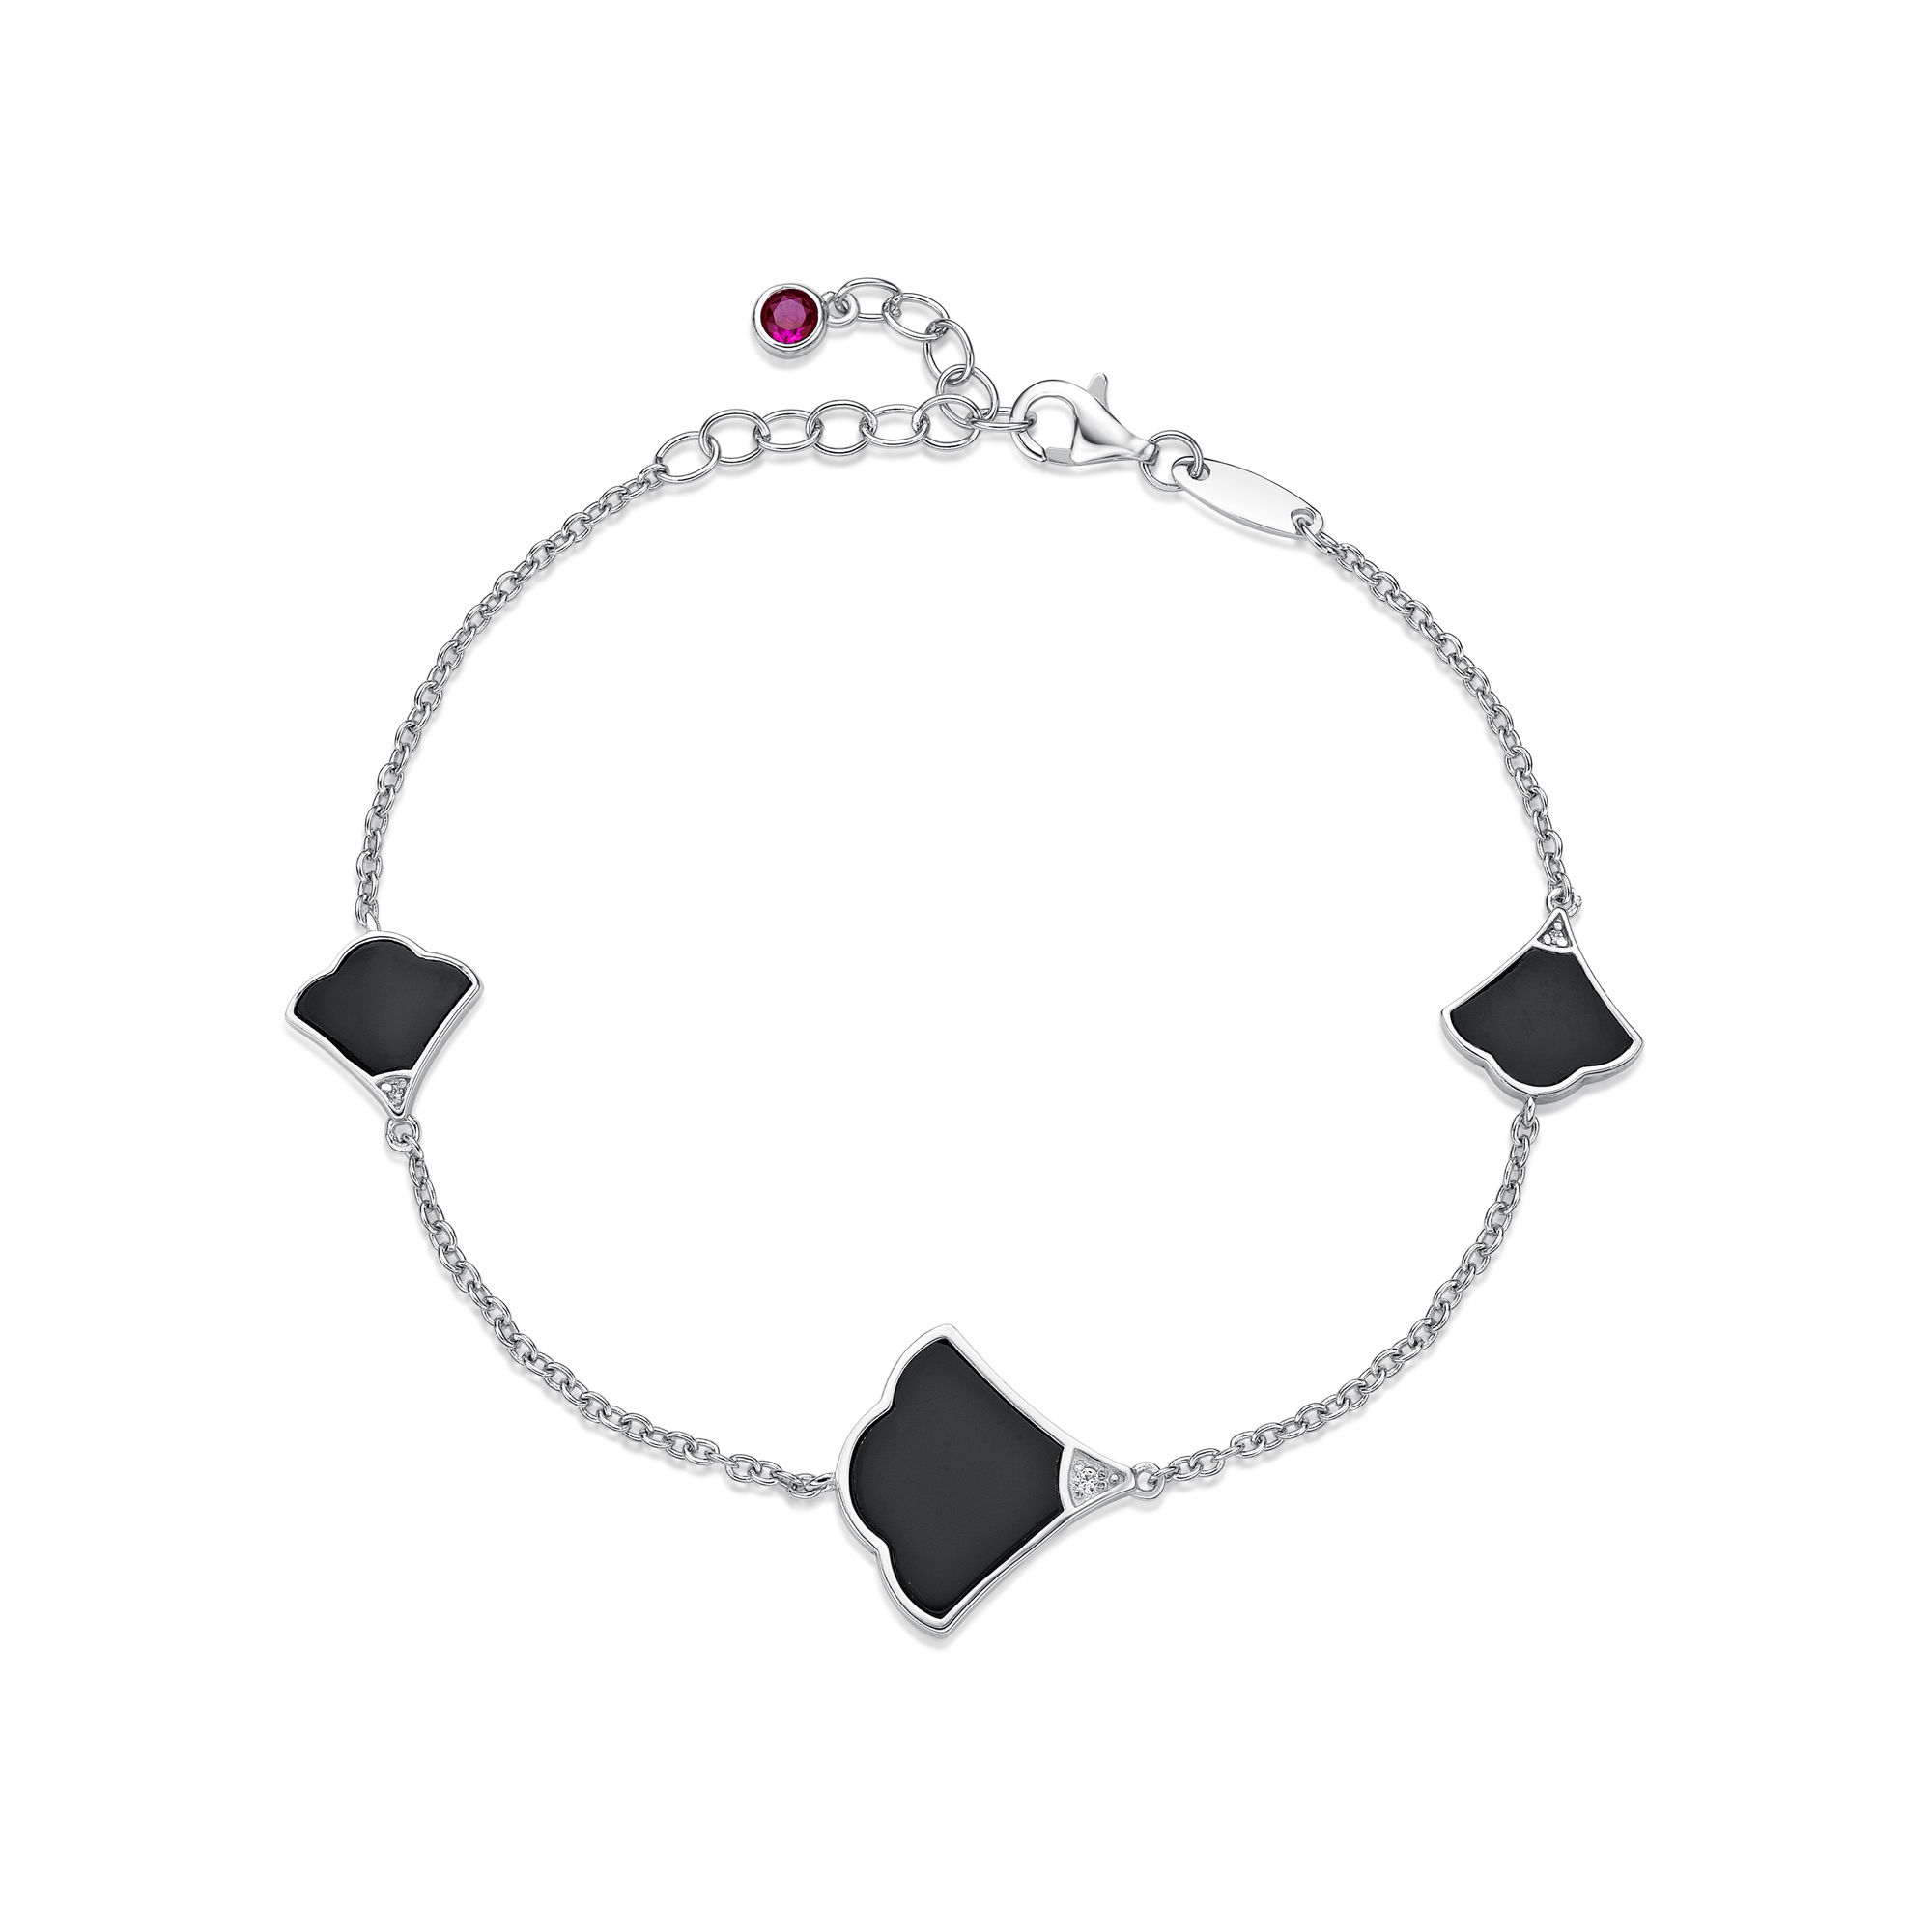 48822-bracelet-fashion-jewelry-sterling-silver-black-onyx-48822-3.jpg